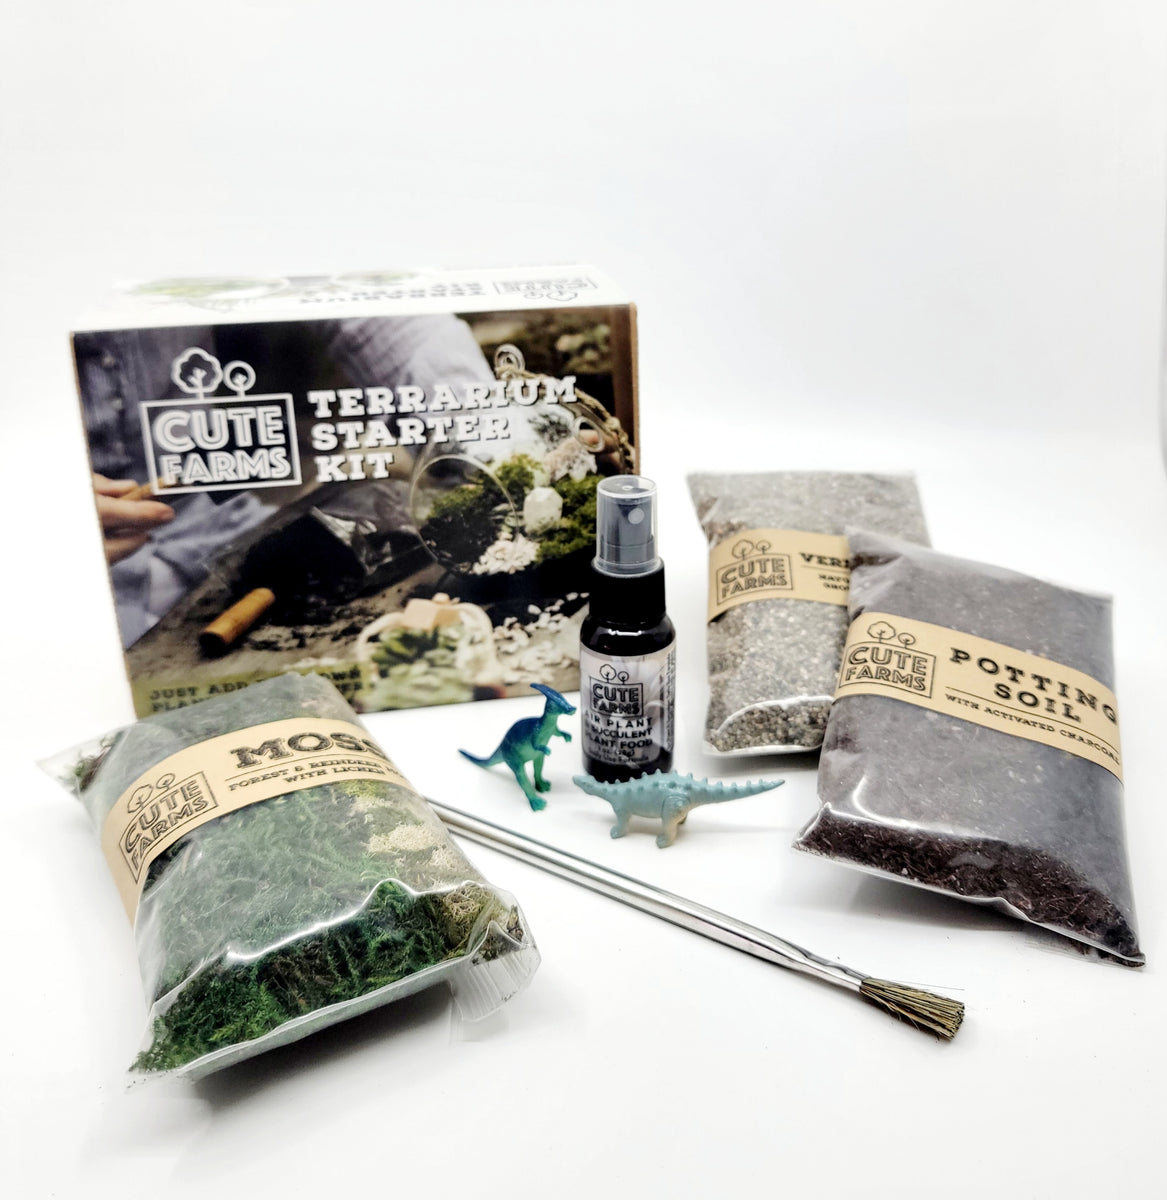 Terrarium Soil Kit — GARDEN